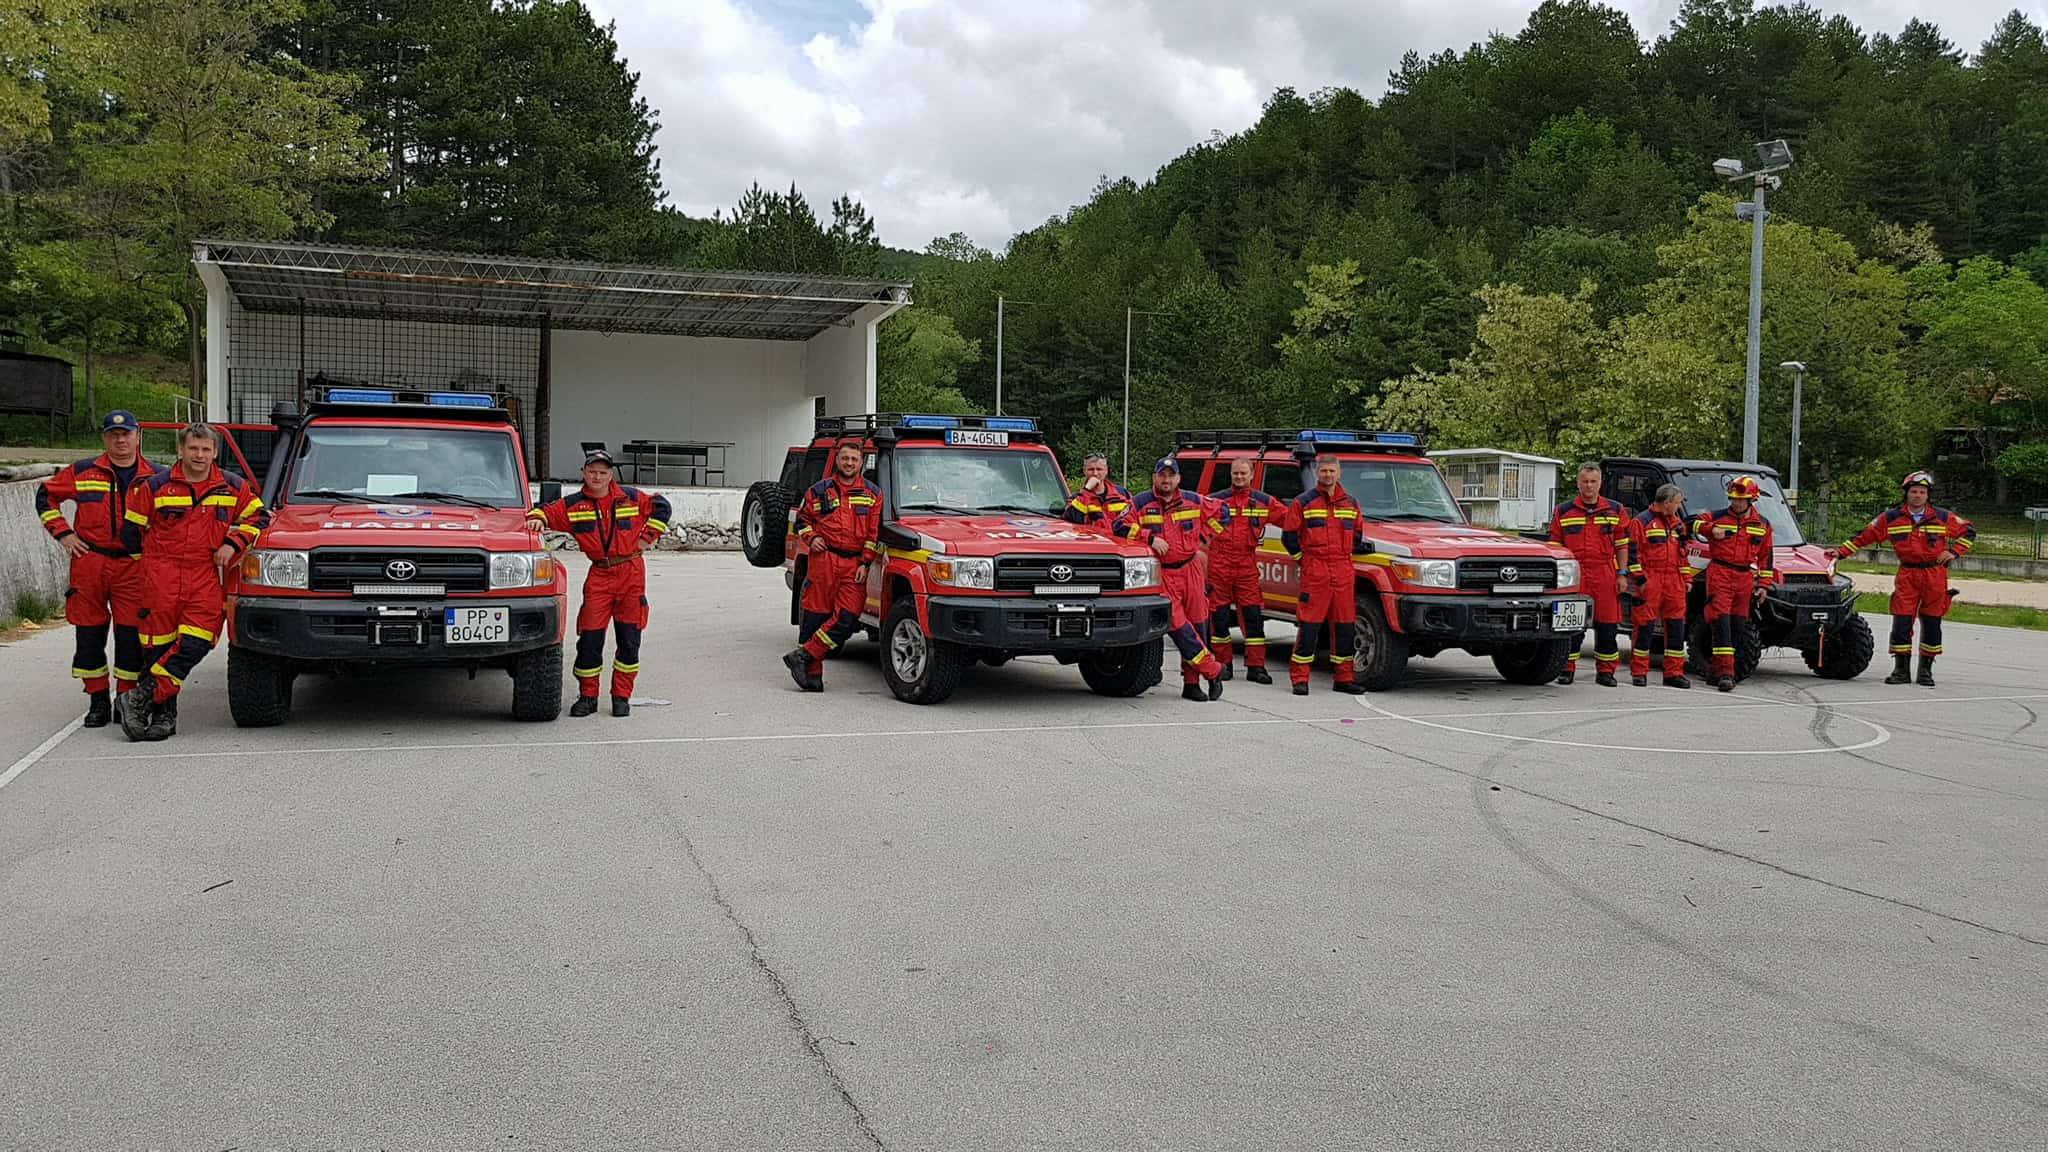 05 - Slovenskí hasiči včera popoludní dorazili na medzinárodné cvičenie „SIGURNOST 2018“ v Chorvátsku